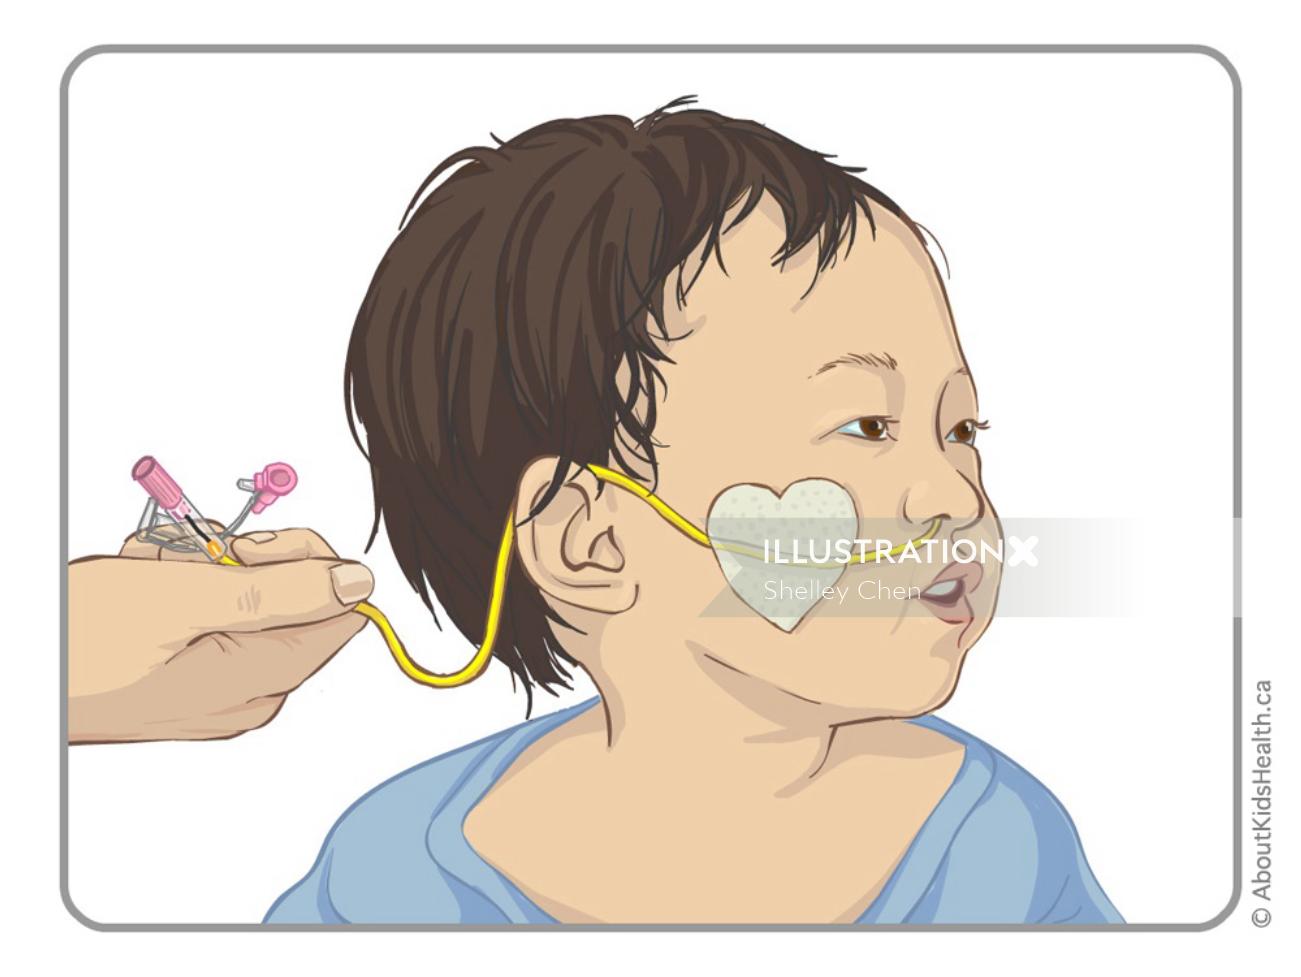 NG Tube Taping in Infants illustration par Shelley Li Wen Chen